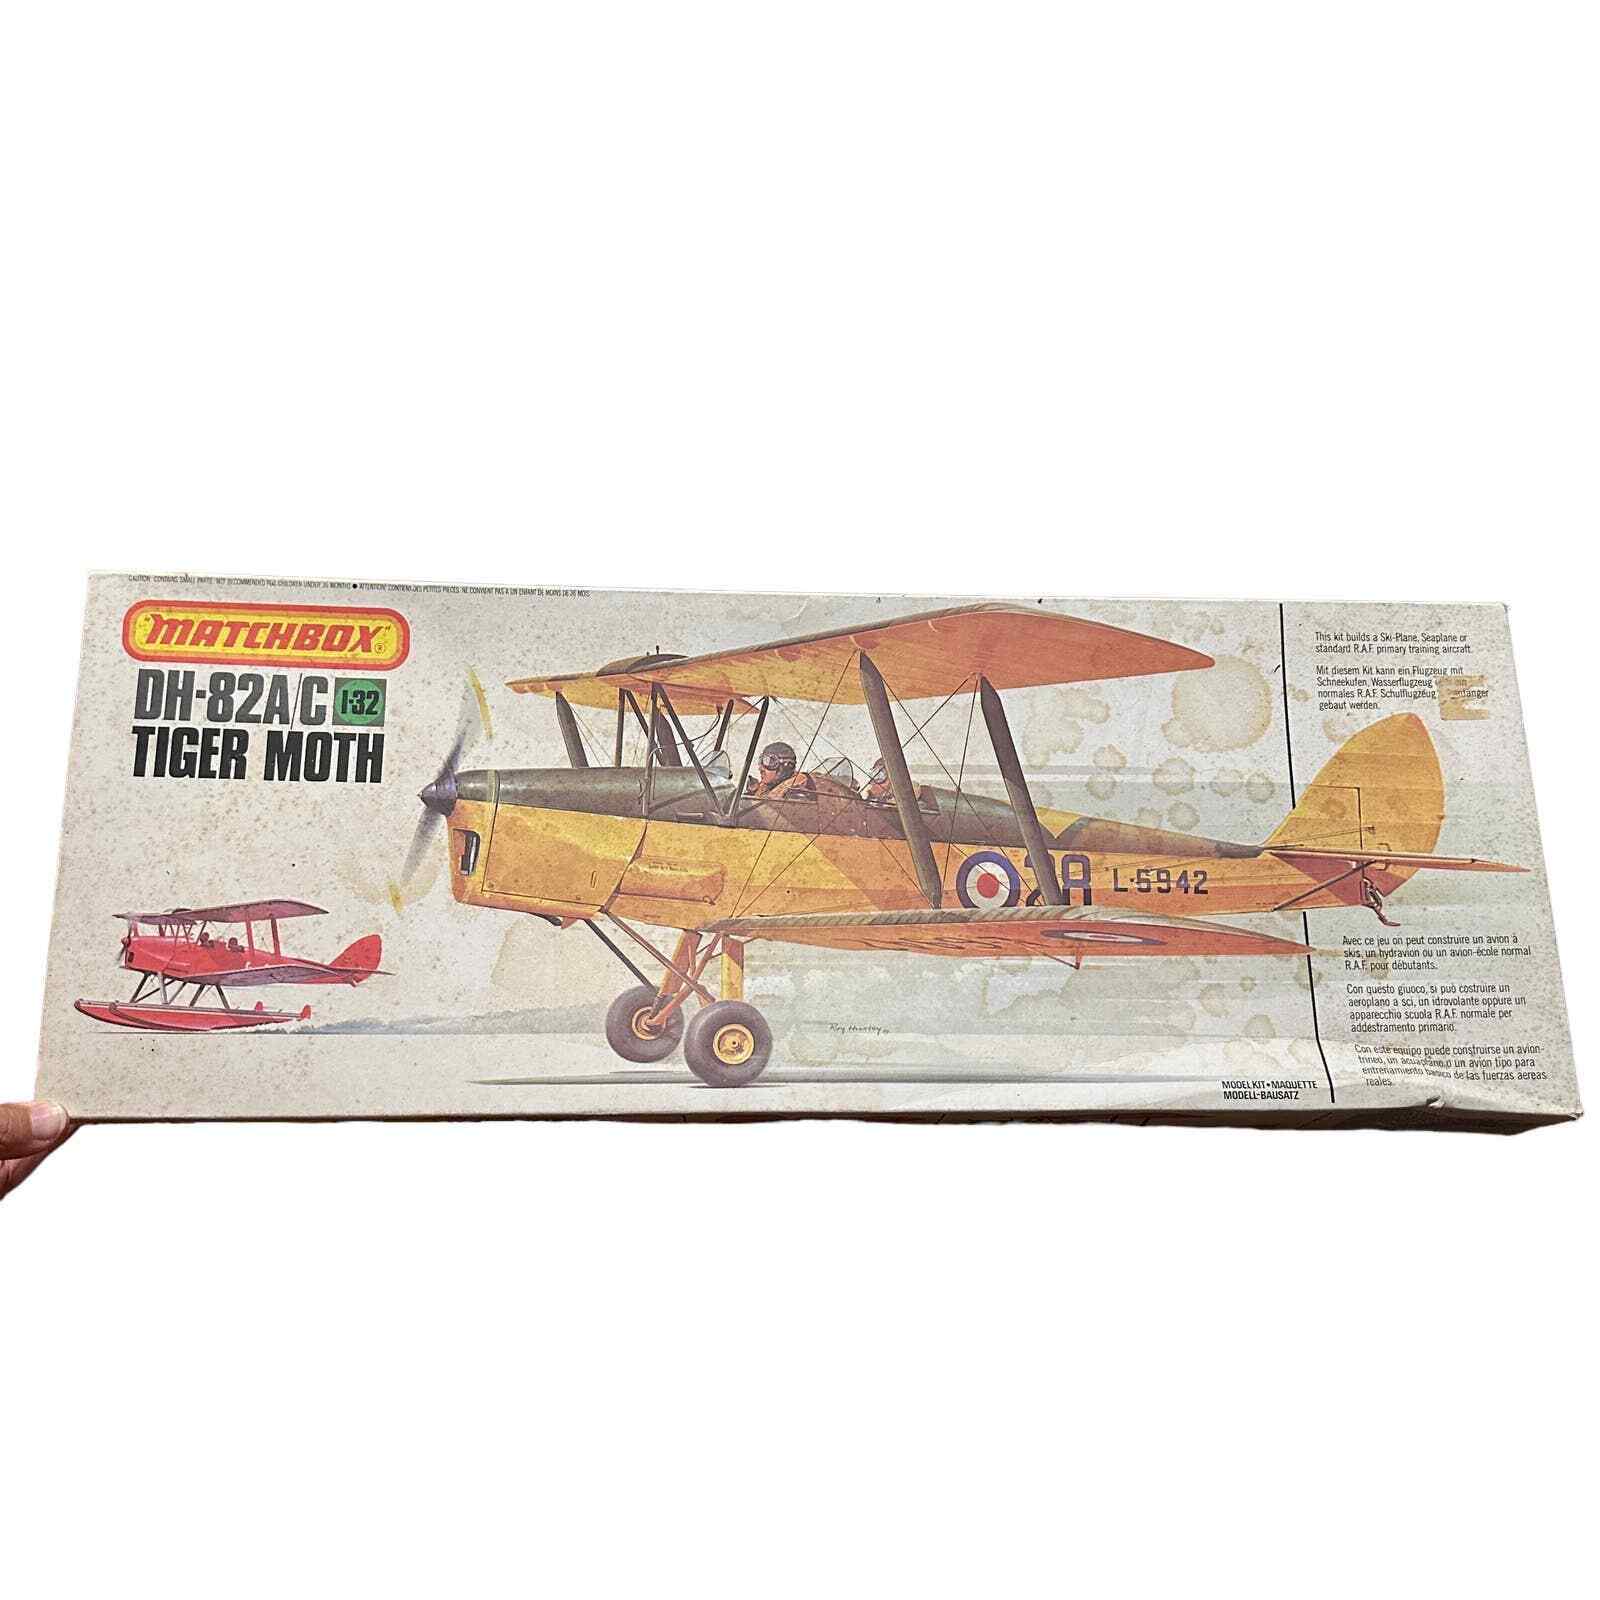 Matchbox DH-82A/C Tiger Moth 1:32 scale plastic model kit